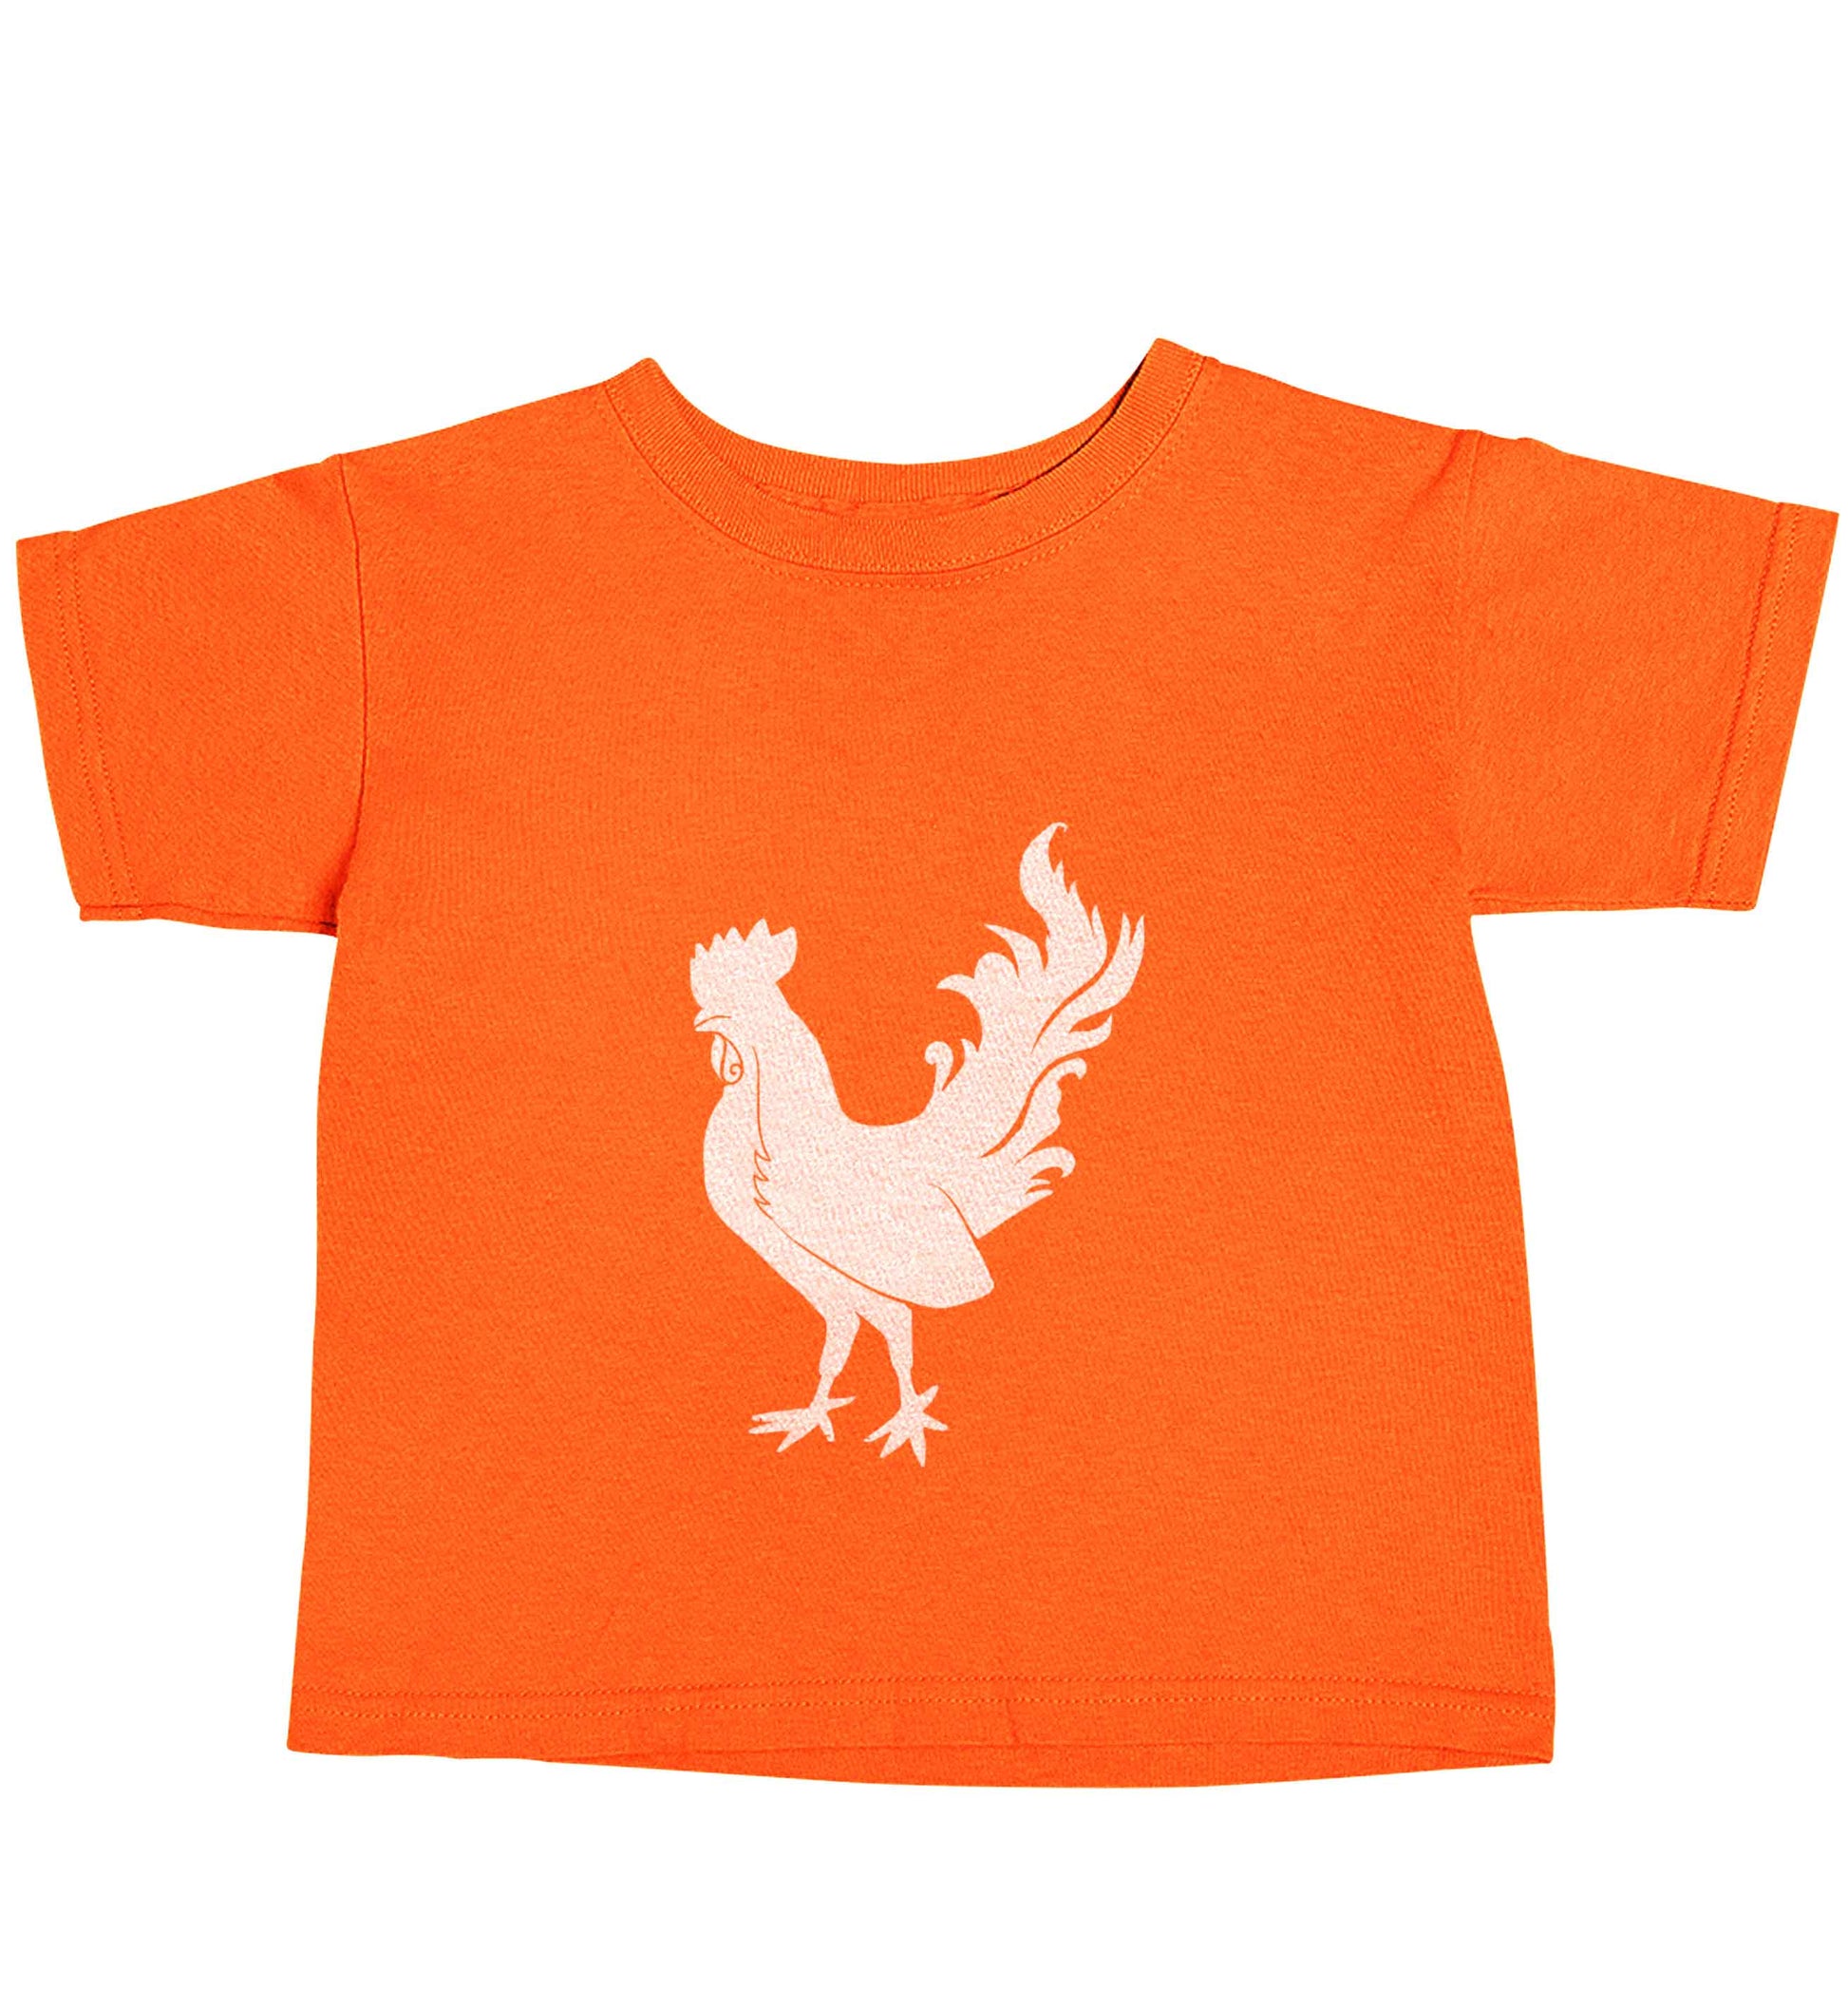 Rooster orange baby toddler Tshirt 2 Years